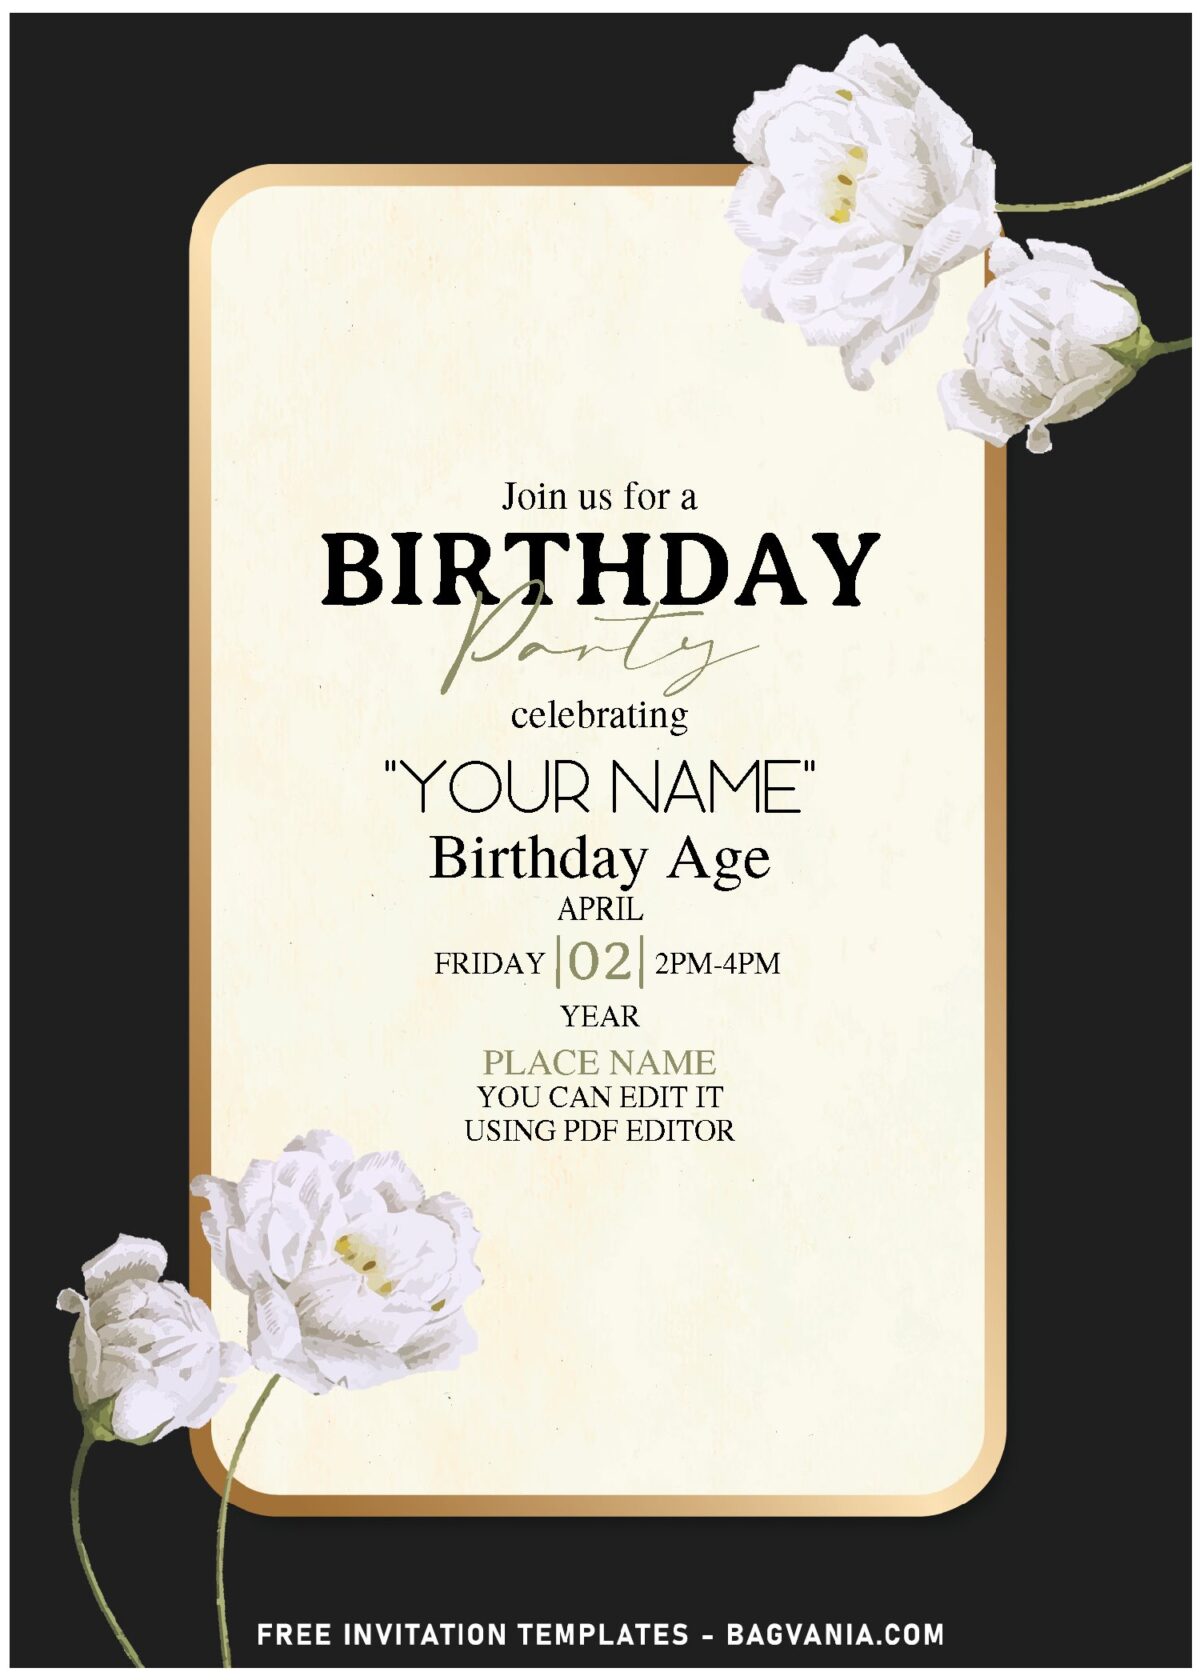 (Free Editable PDF) Stylish & Captivating Moody Floral Birthday Invitation Templates with enchanting white rose